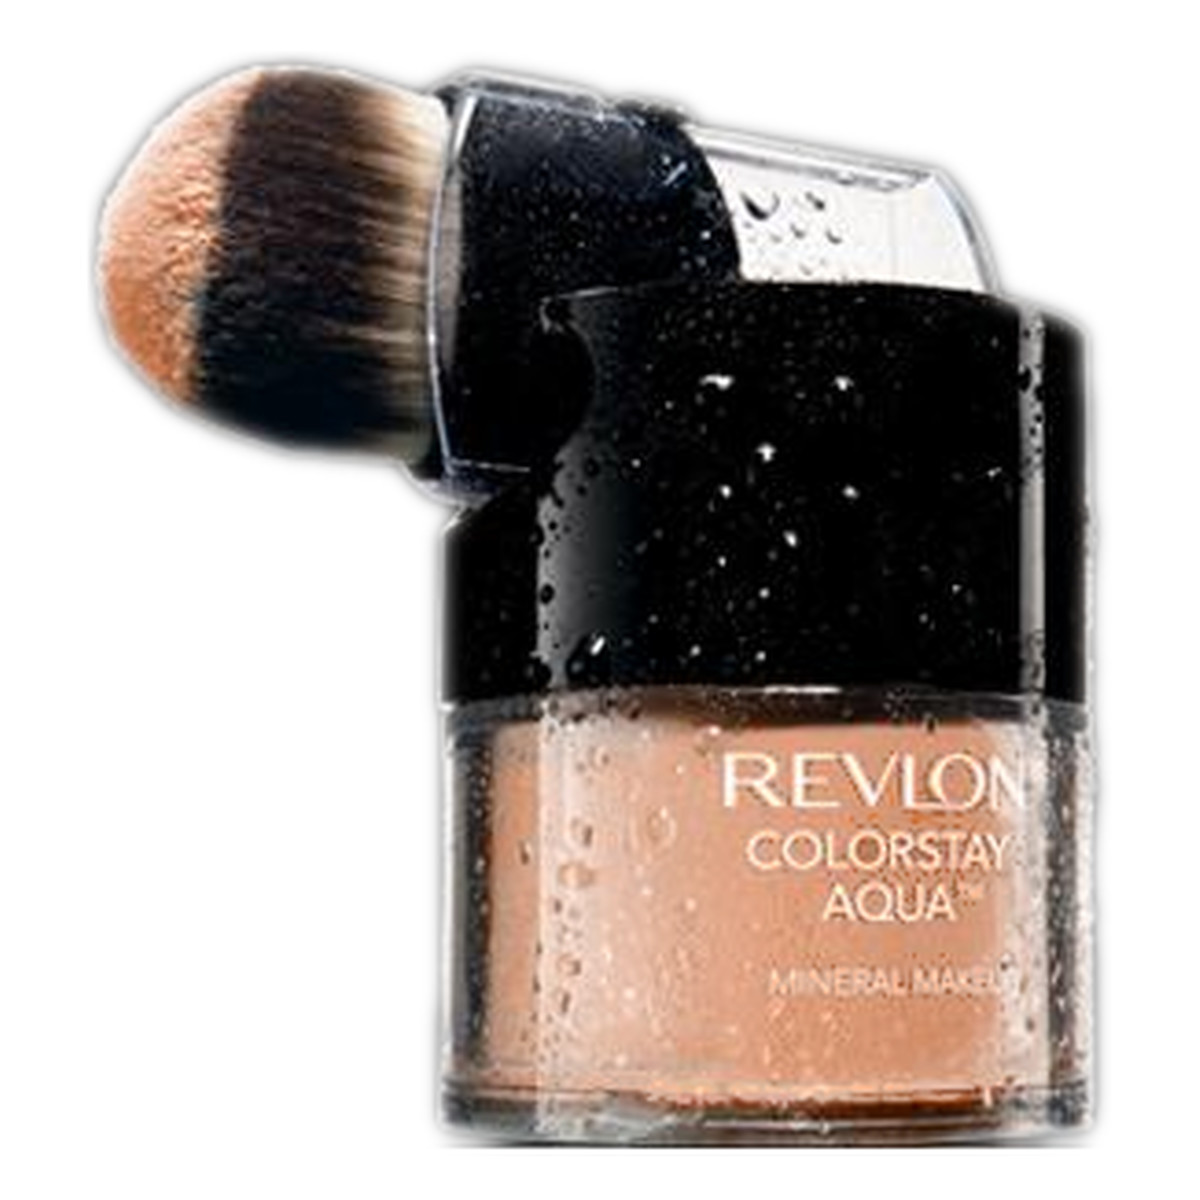 Revlon Professional ColorStay Aqua Mineral Makeup Podkład Mineralny 9ml